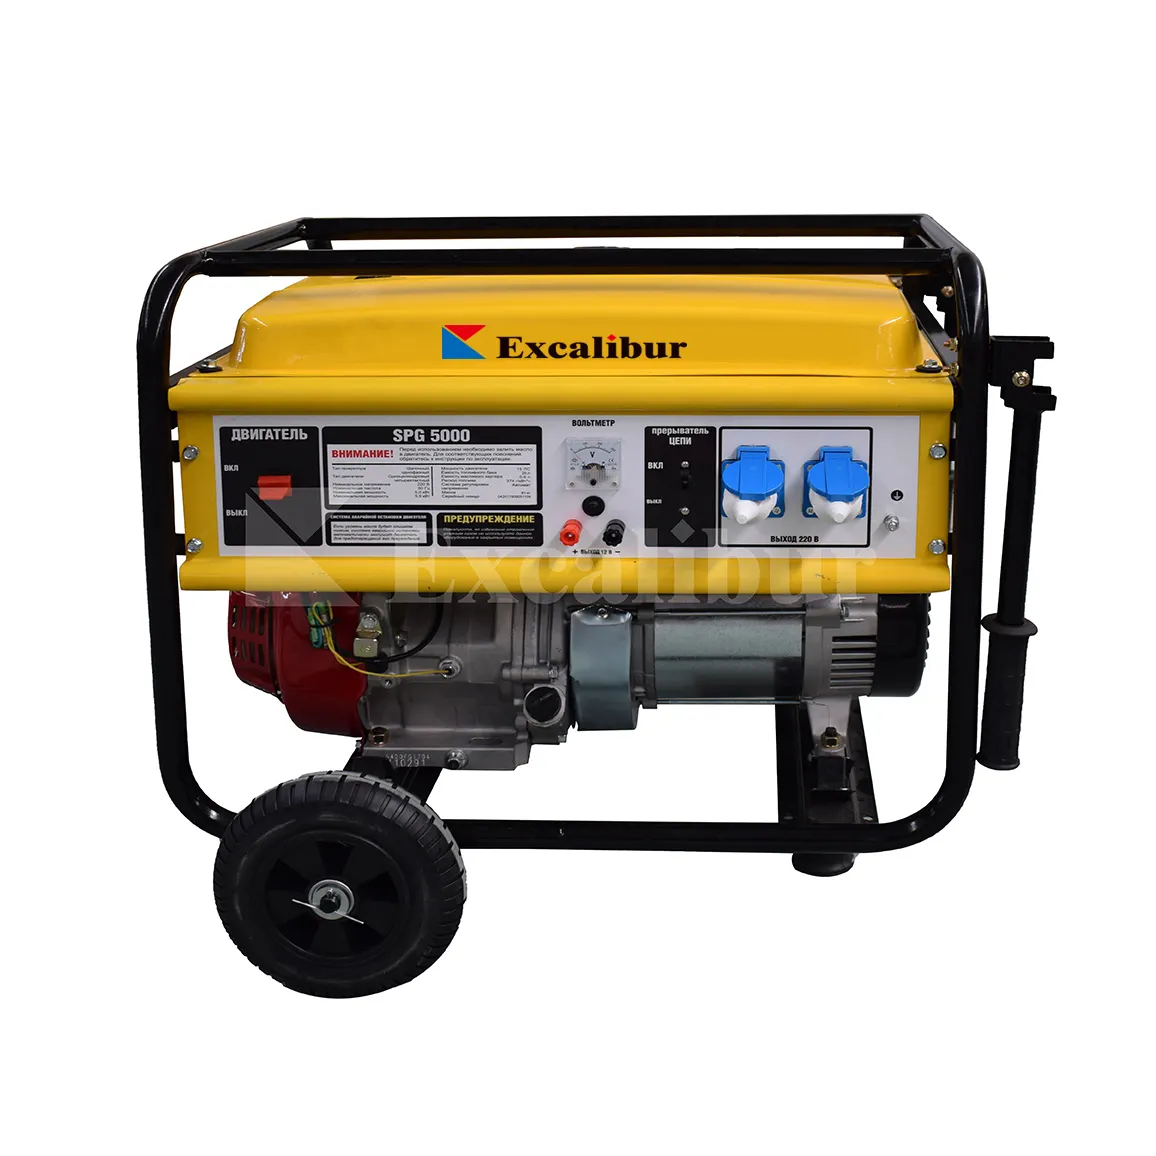 Excalibur mini portable 5kw gasoline generator factory directly